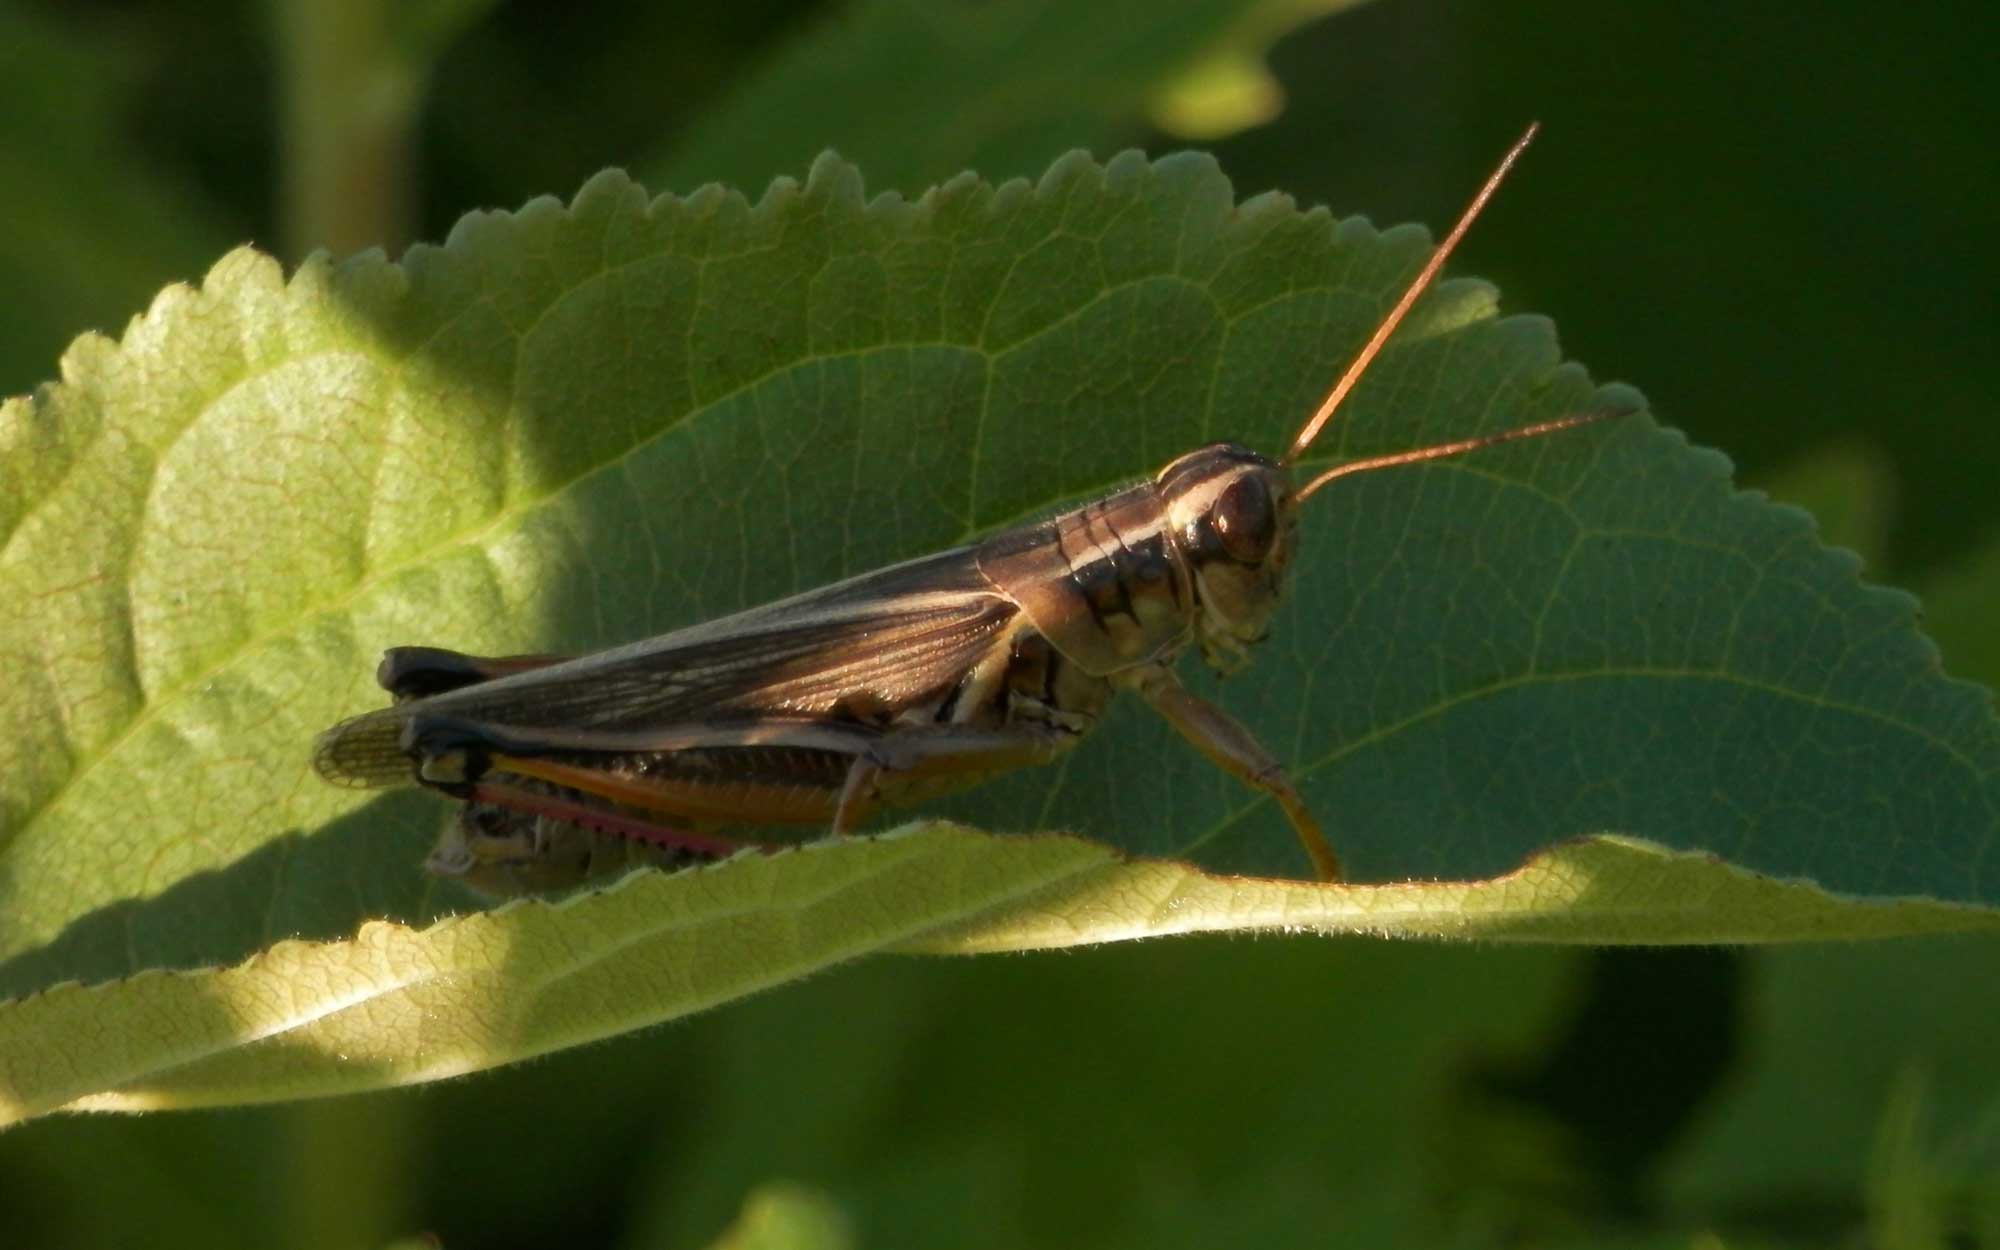 Two-stripped grasshopper resting on a leaf in a garden. Courtesy: Ryan Hodnett (CC BY-SA 4.0)